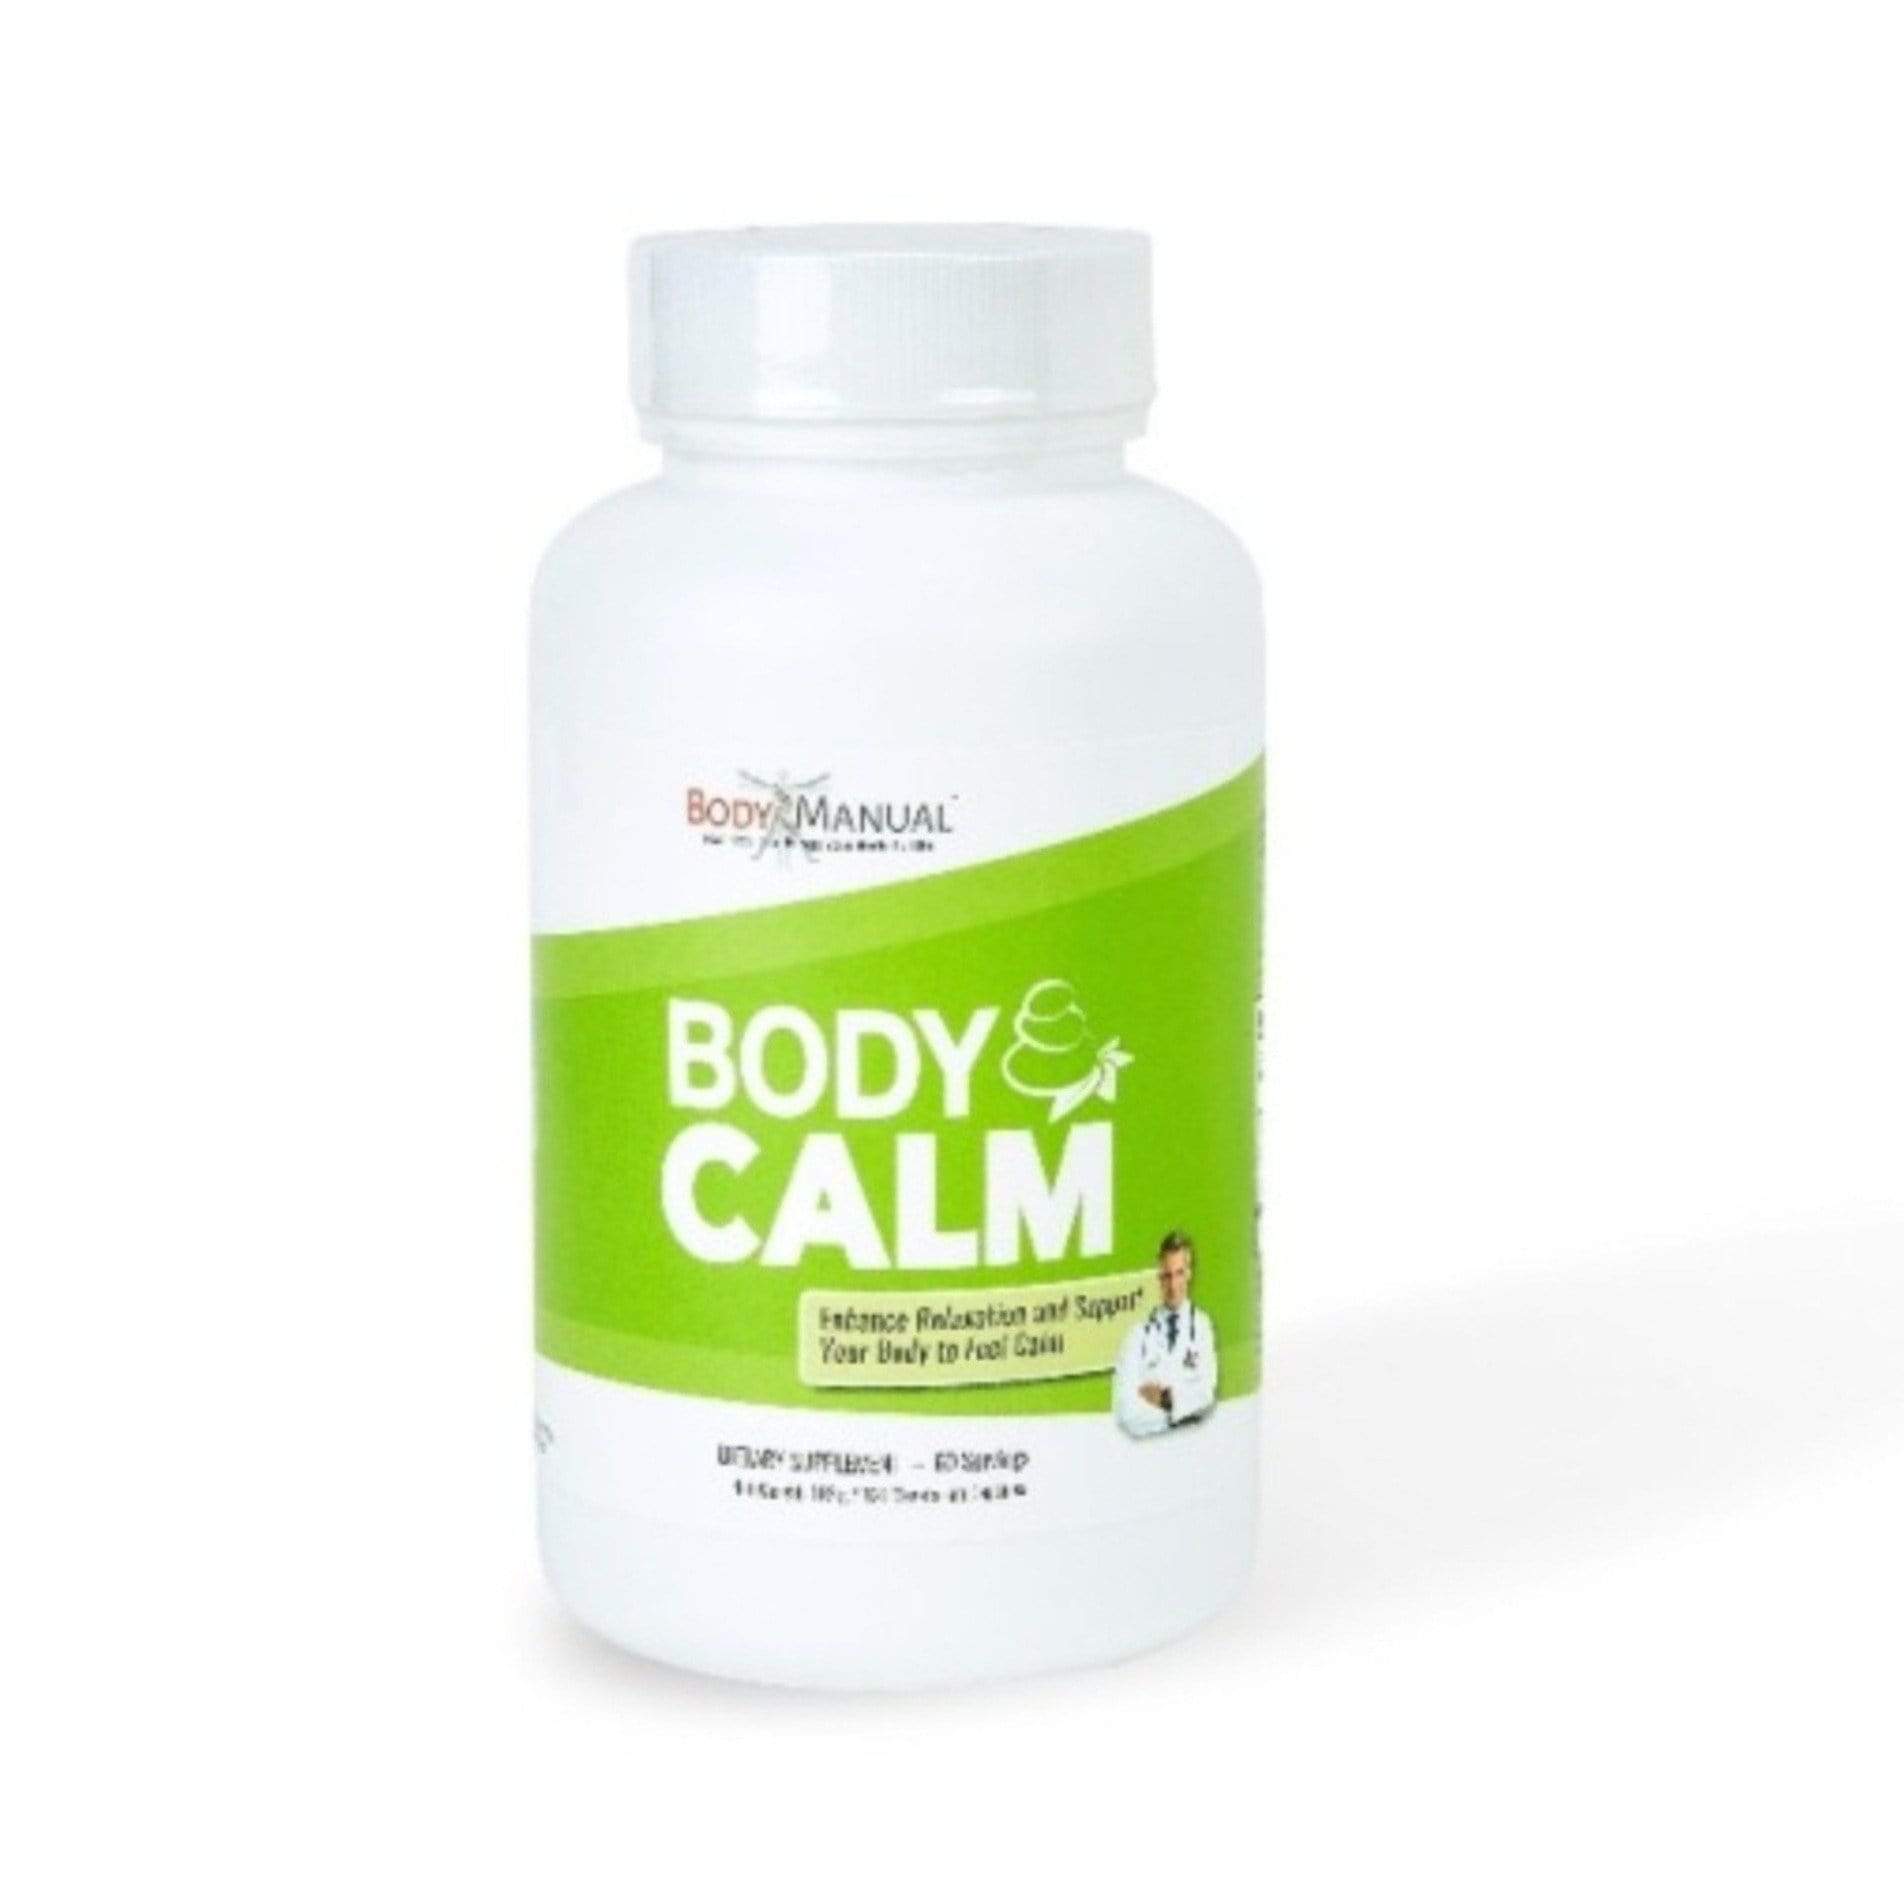 bodymanual Capsules (2-Month Supply) Body Calm - Capsules, Powder